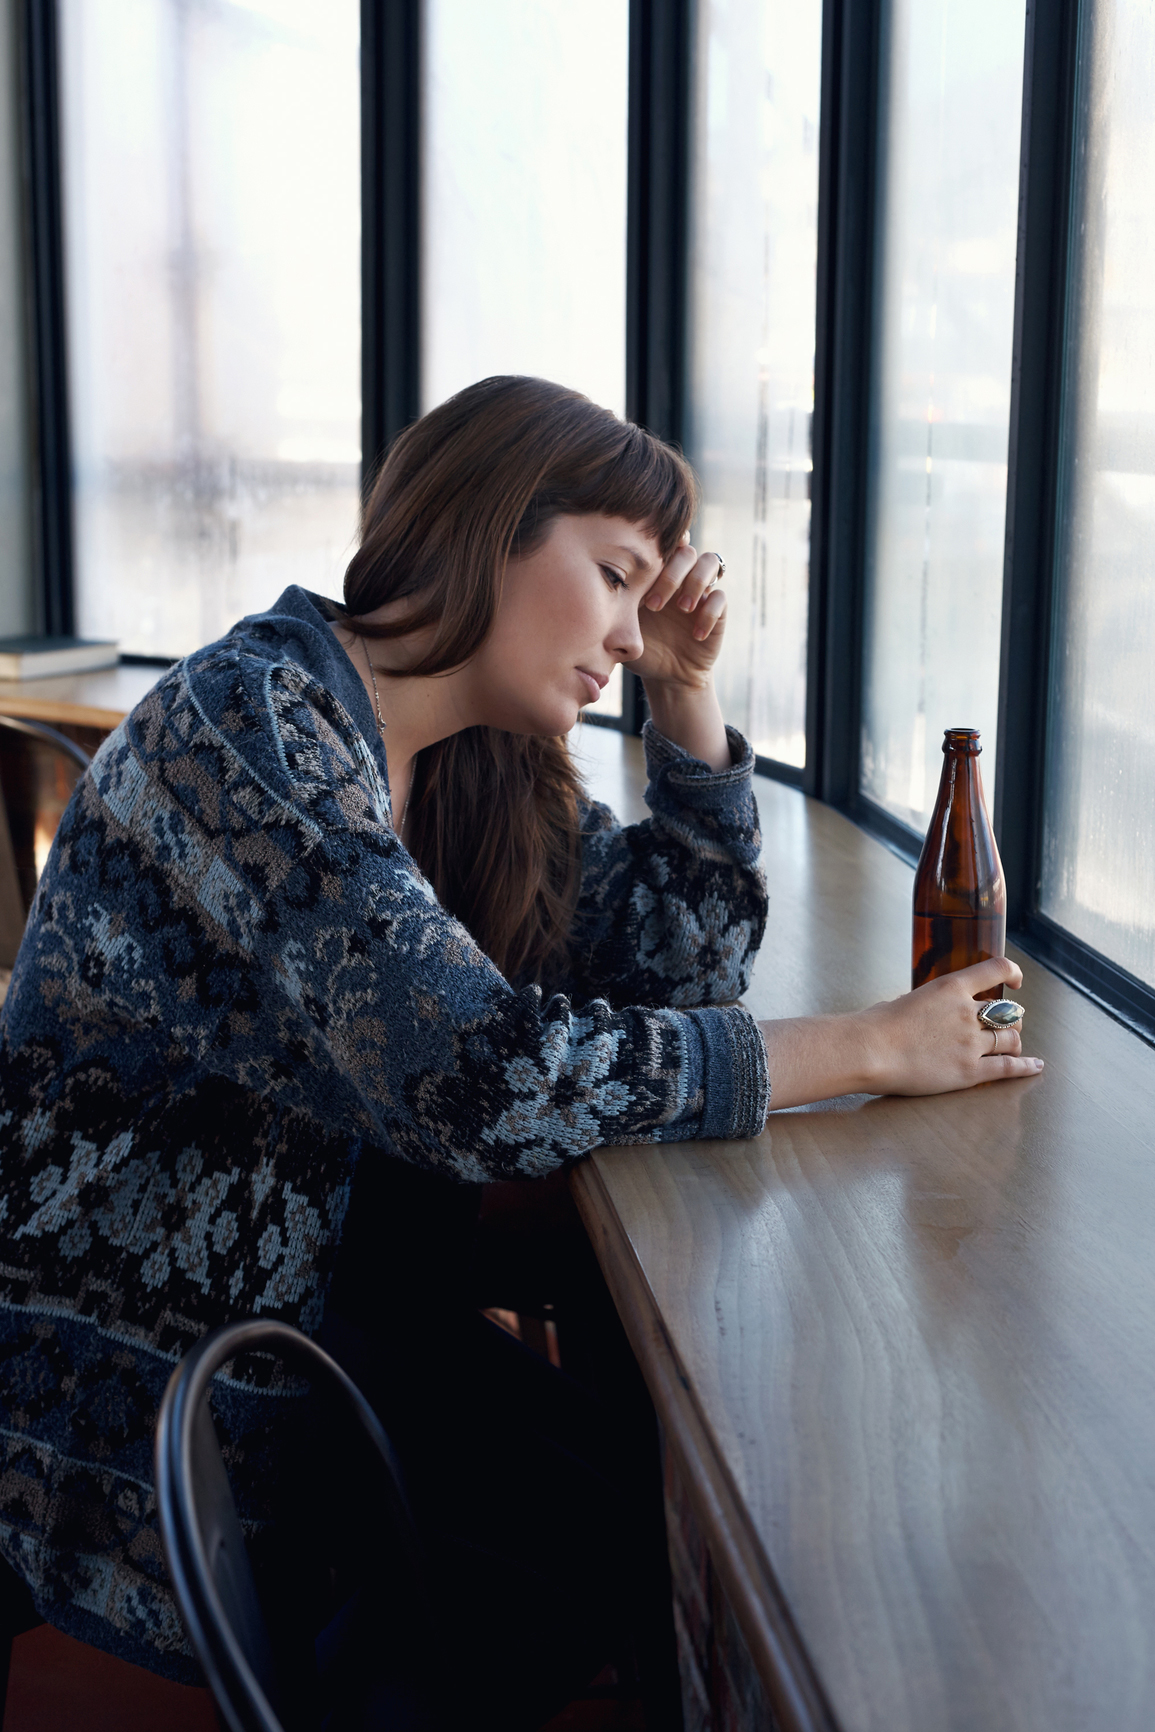 sad woman drinking a beer